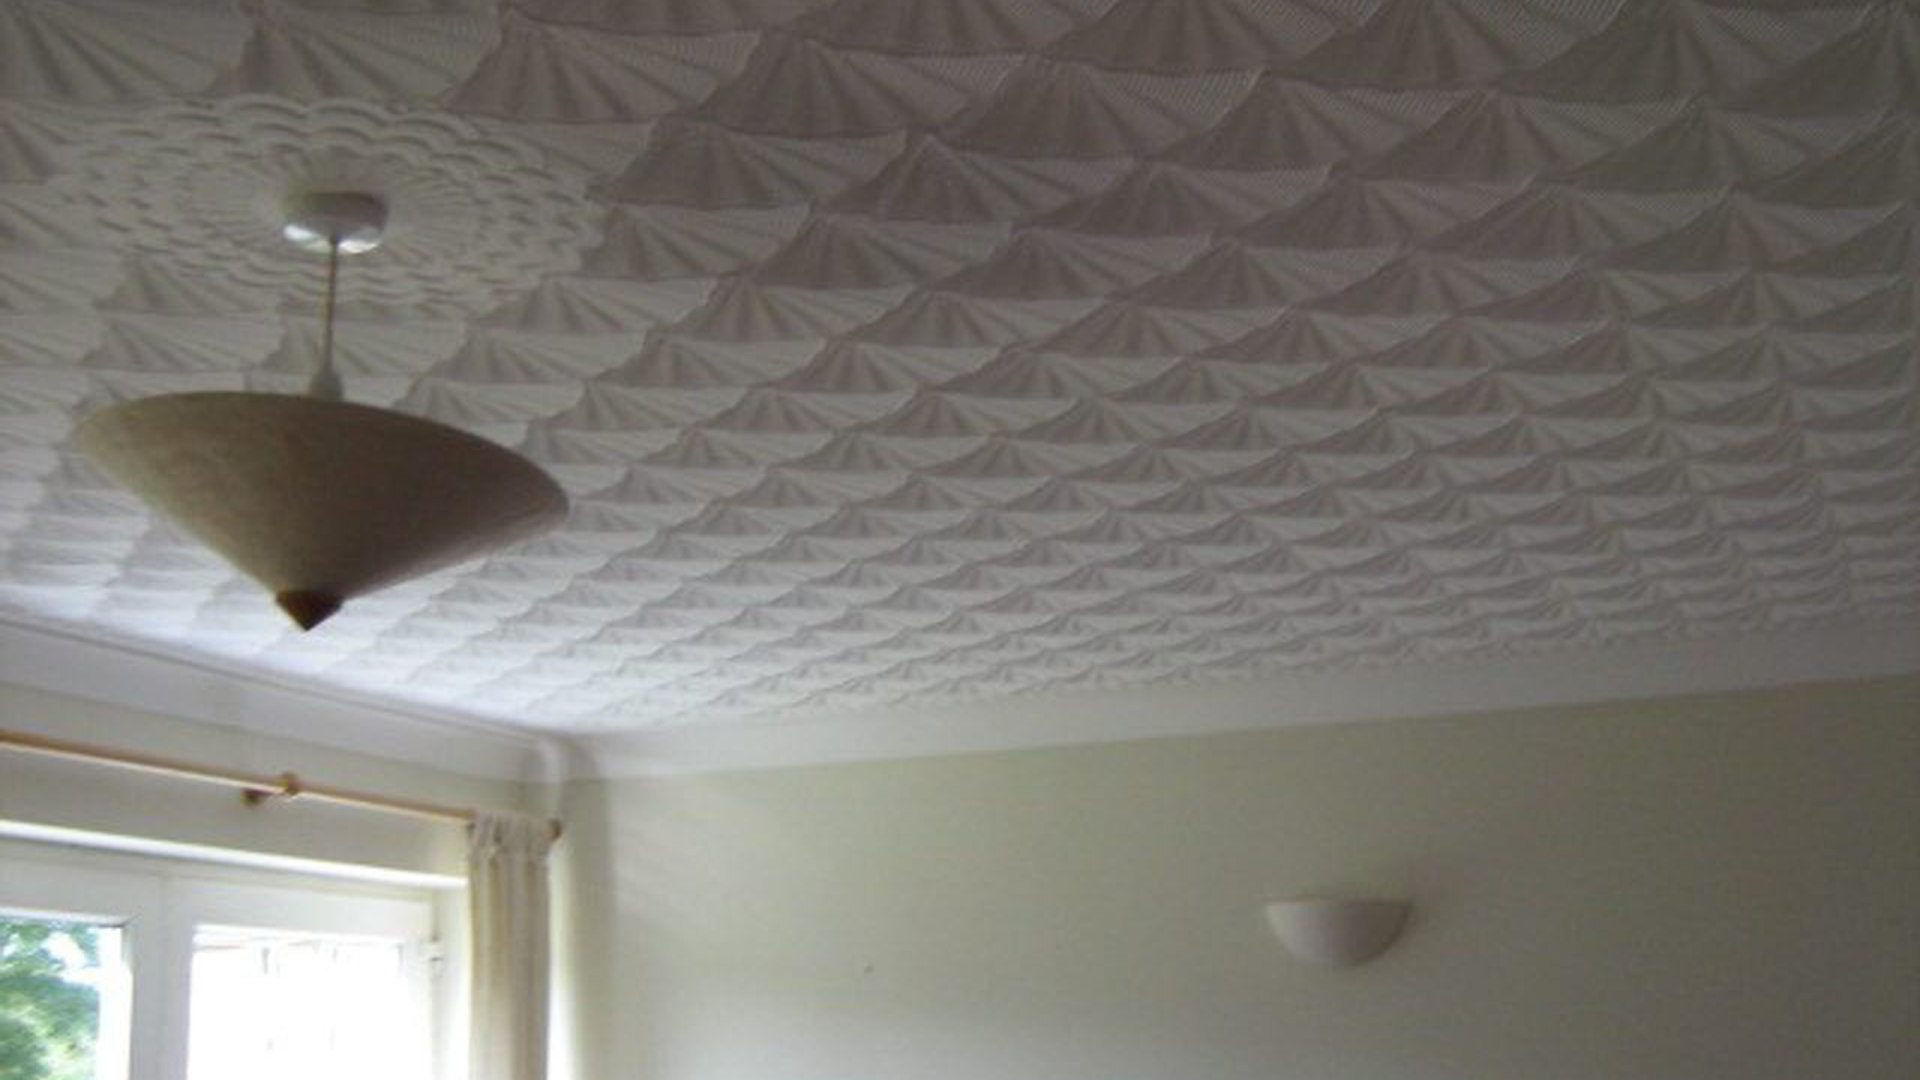 Asbestos containing textured ceiling finish